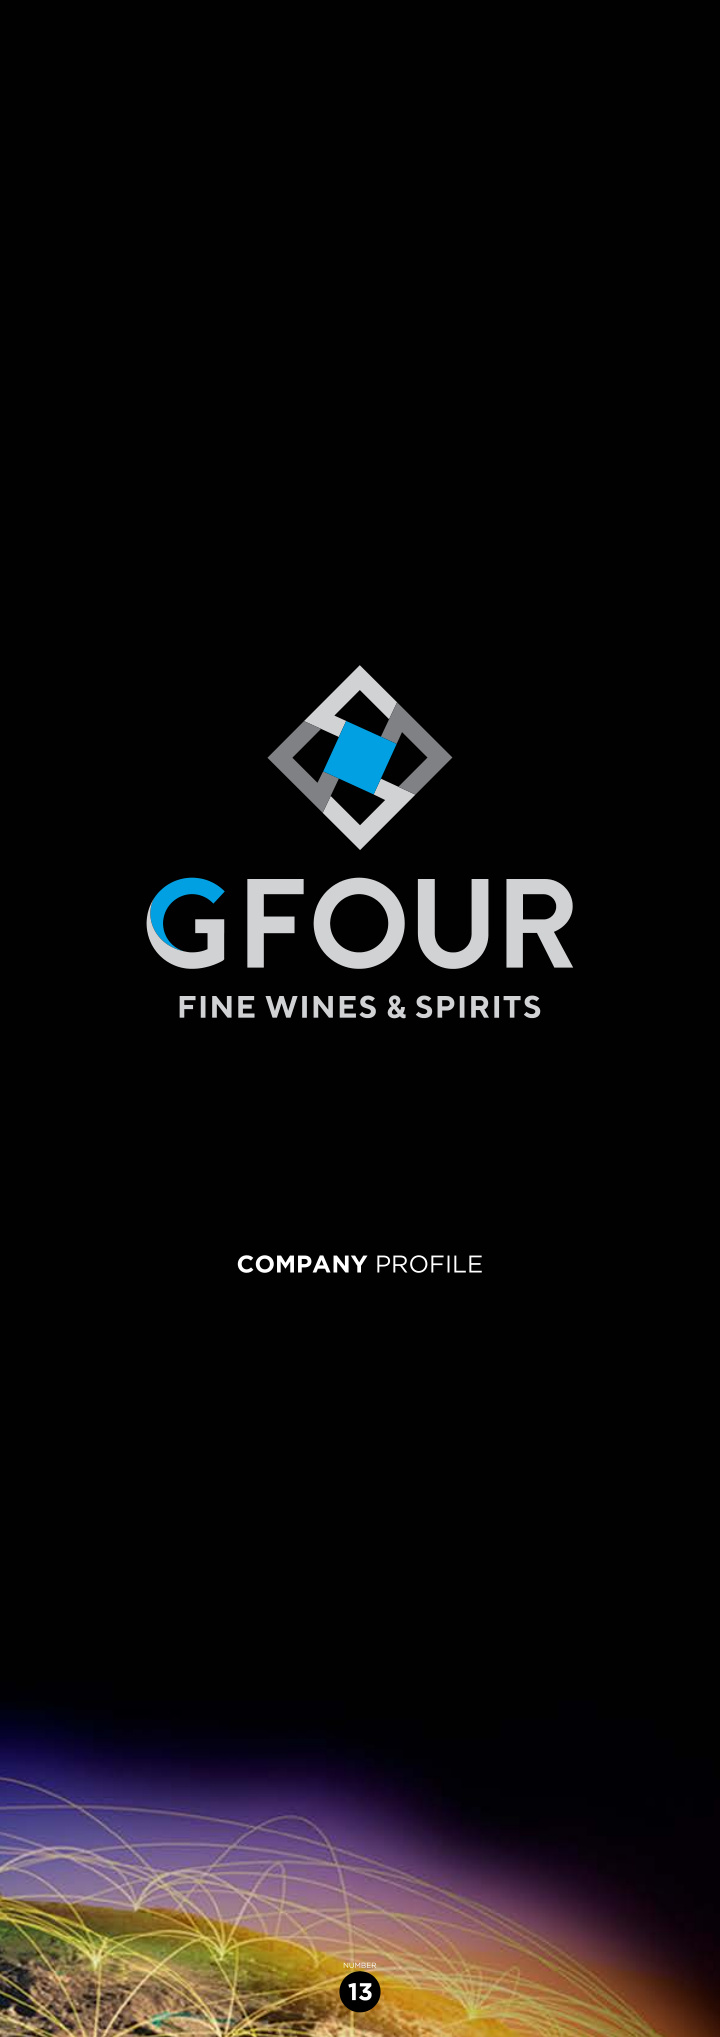 company profile gfour